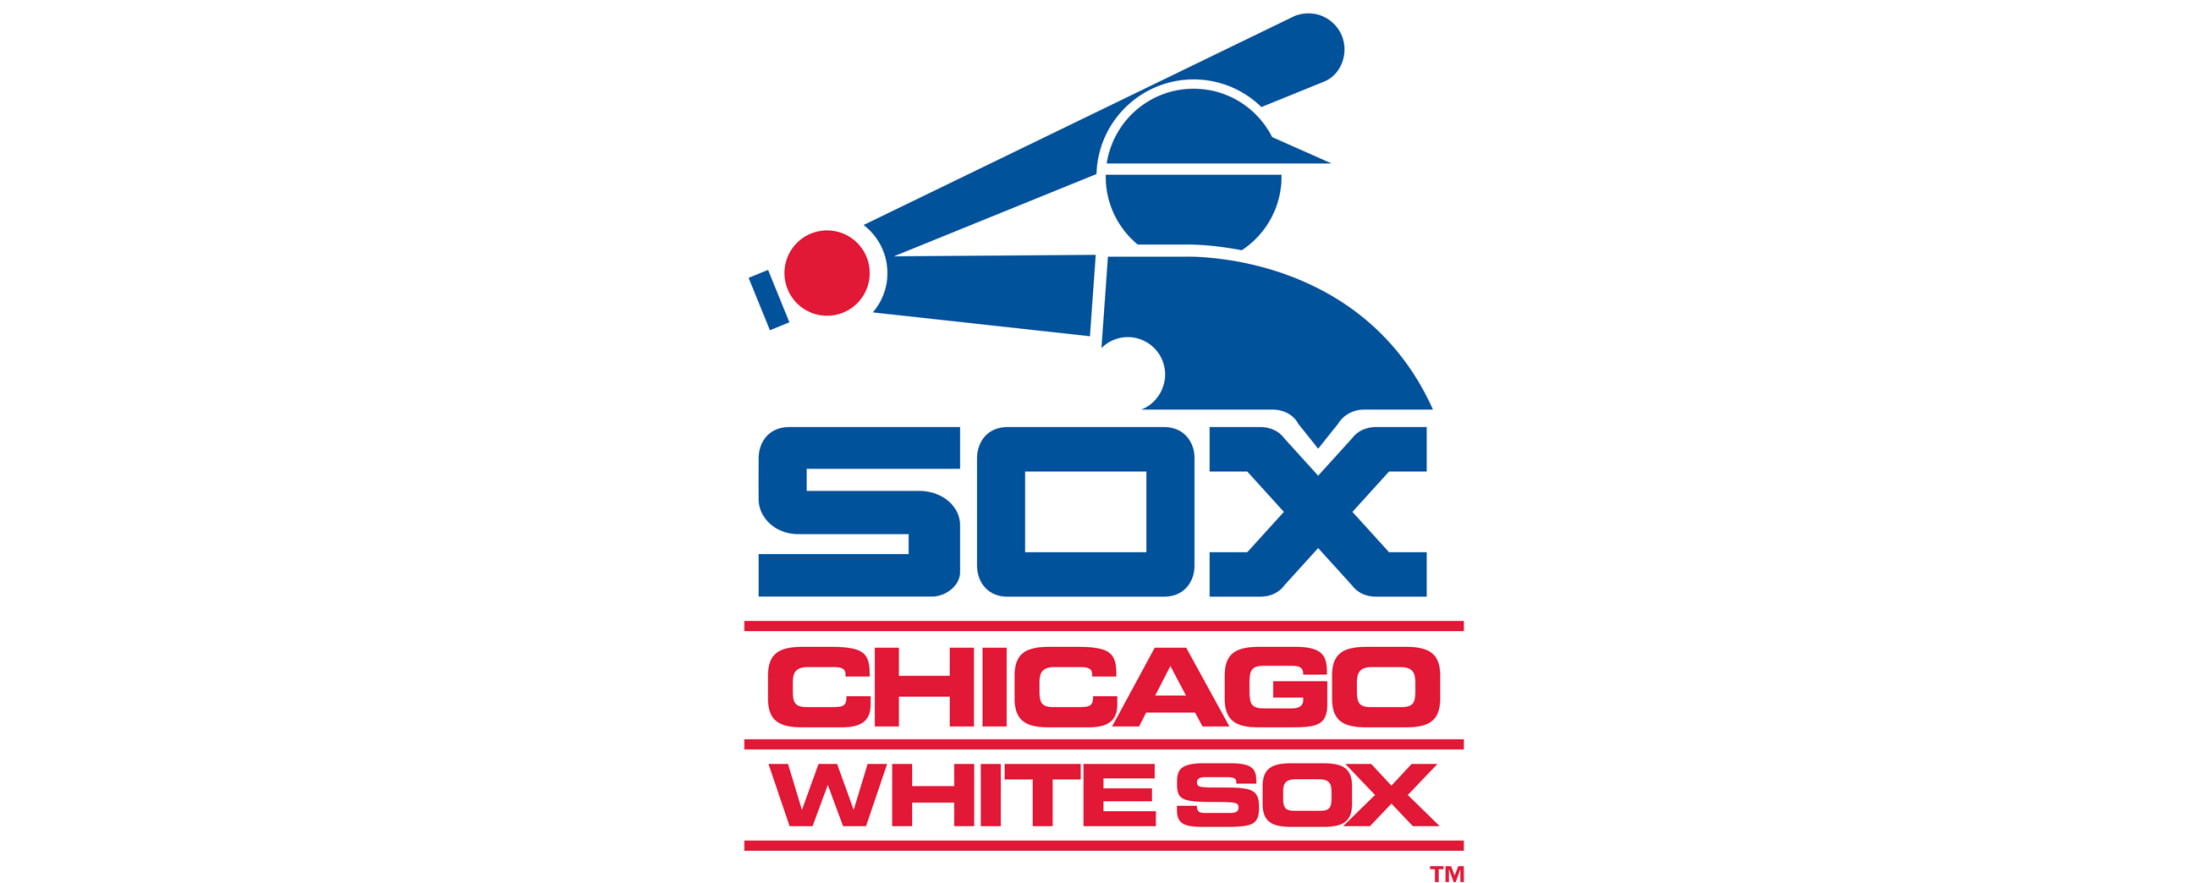 vintage chicago white sox